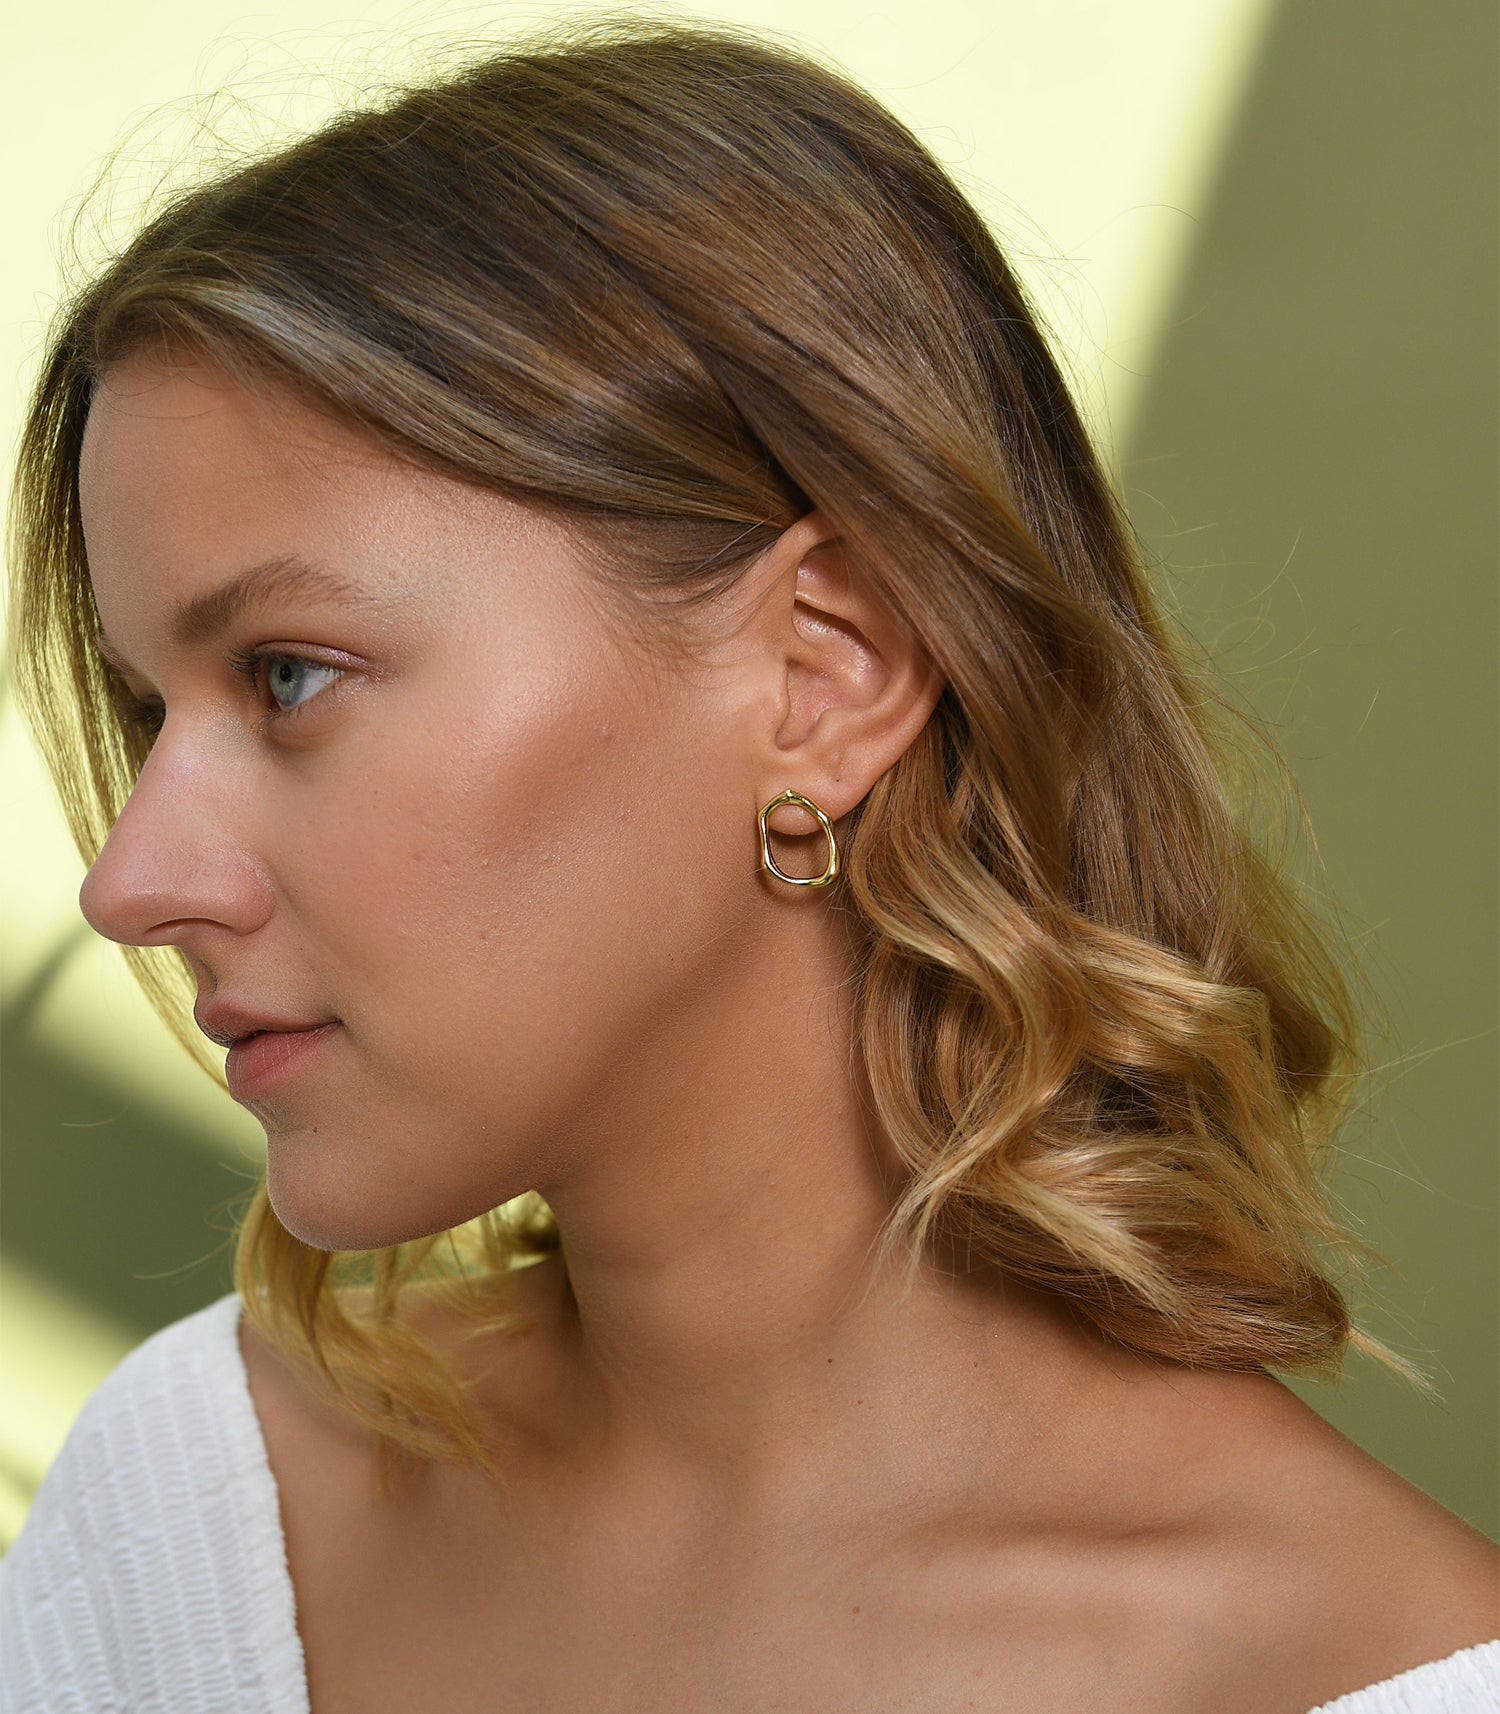 A model wearing a gold vermeil, circle stud earring. The circle has an irregular shape.